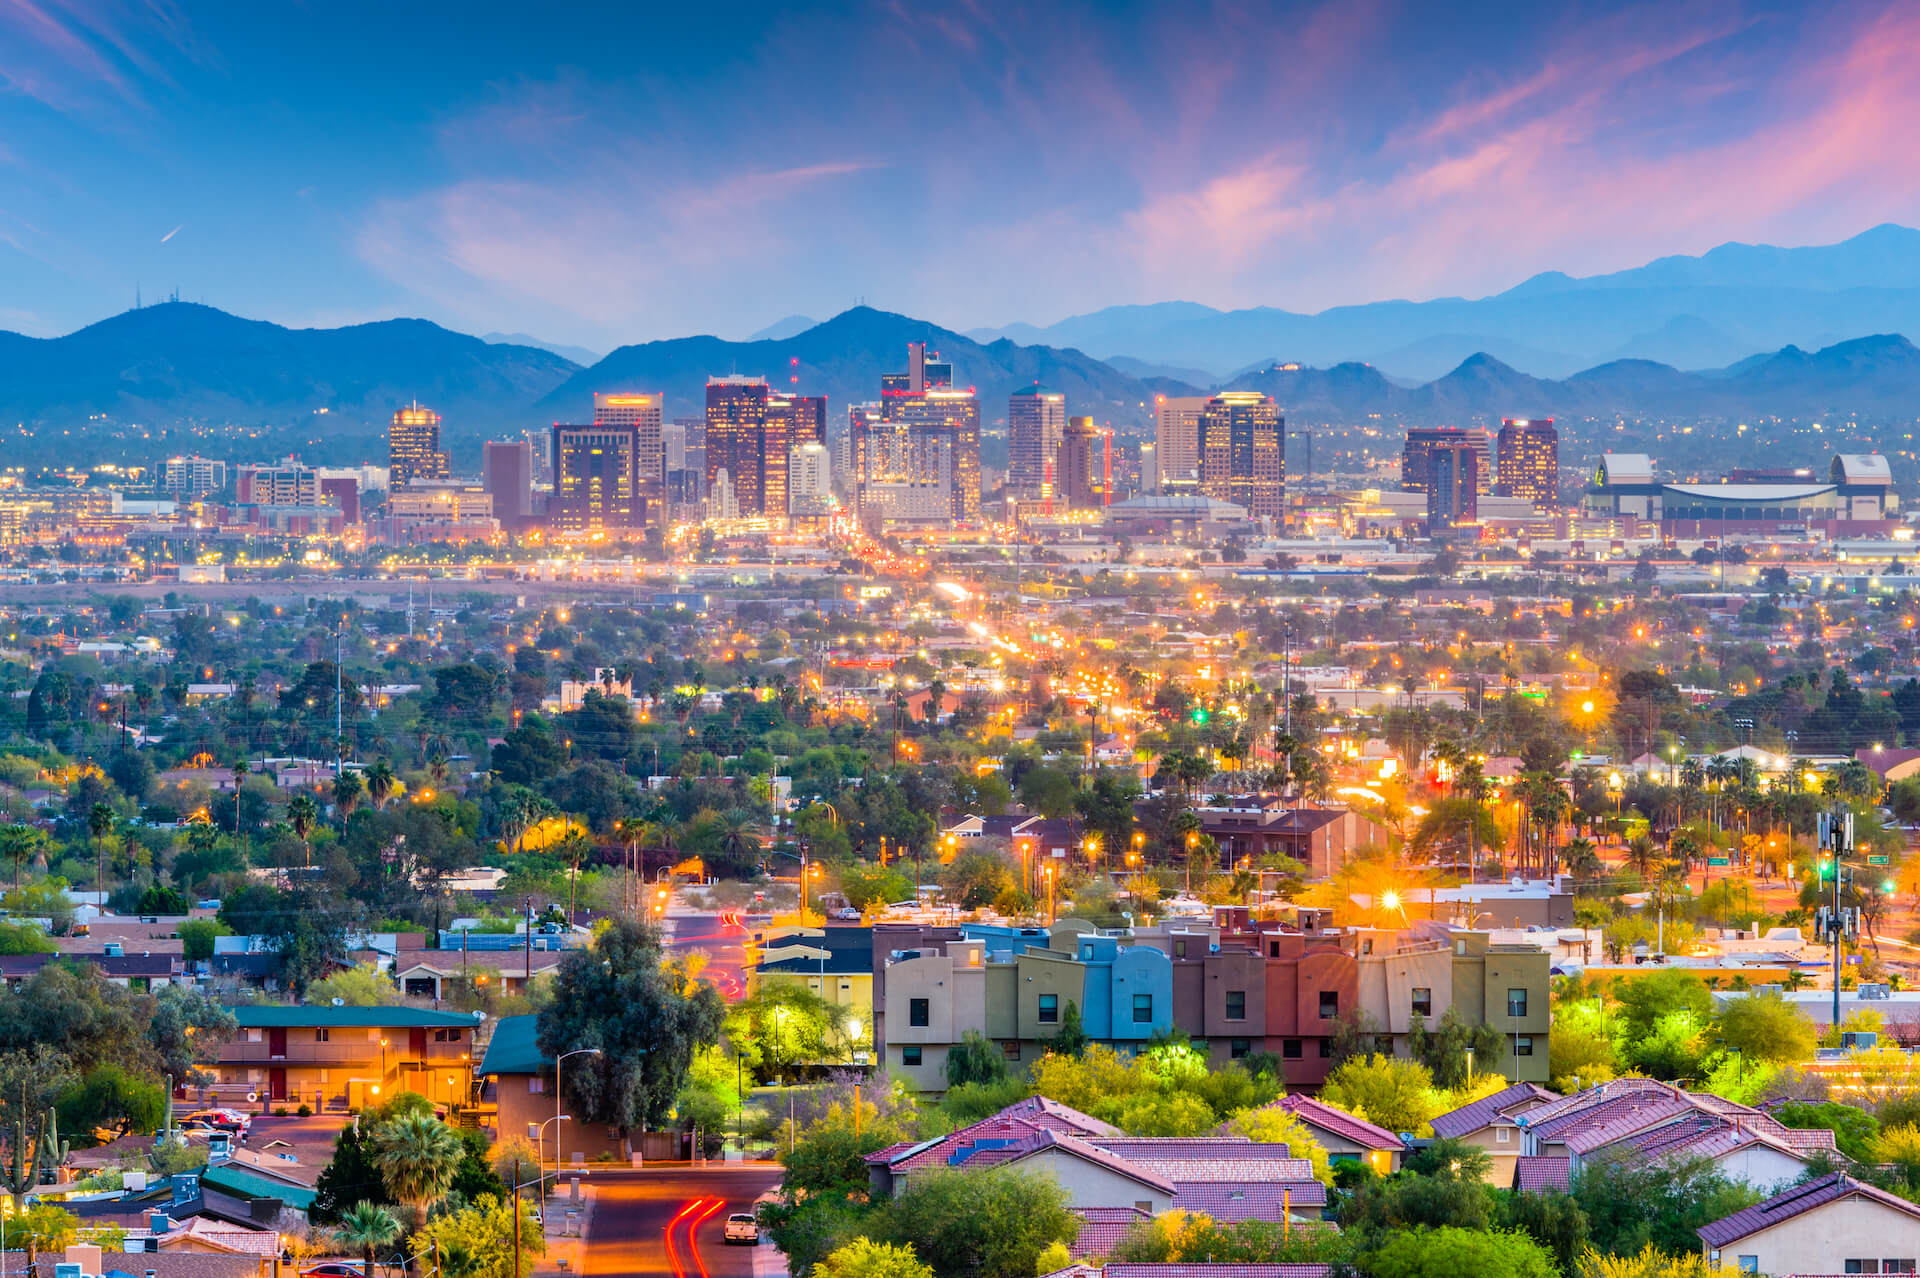 Phoenix metropolitan area recorded a 7.7% increase in GDP